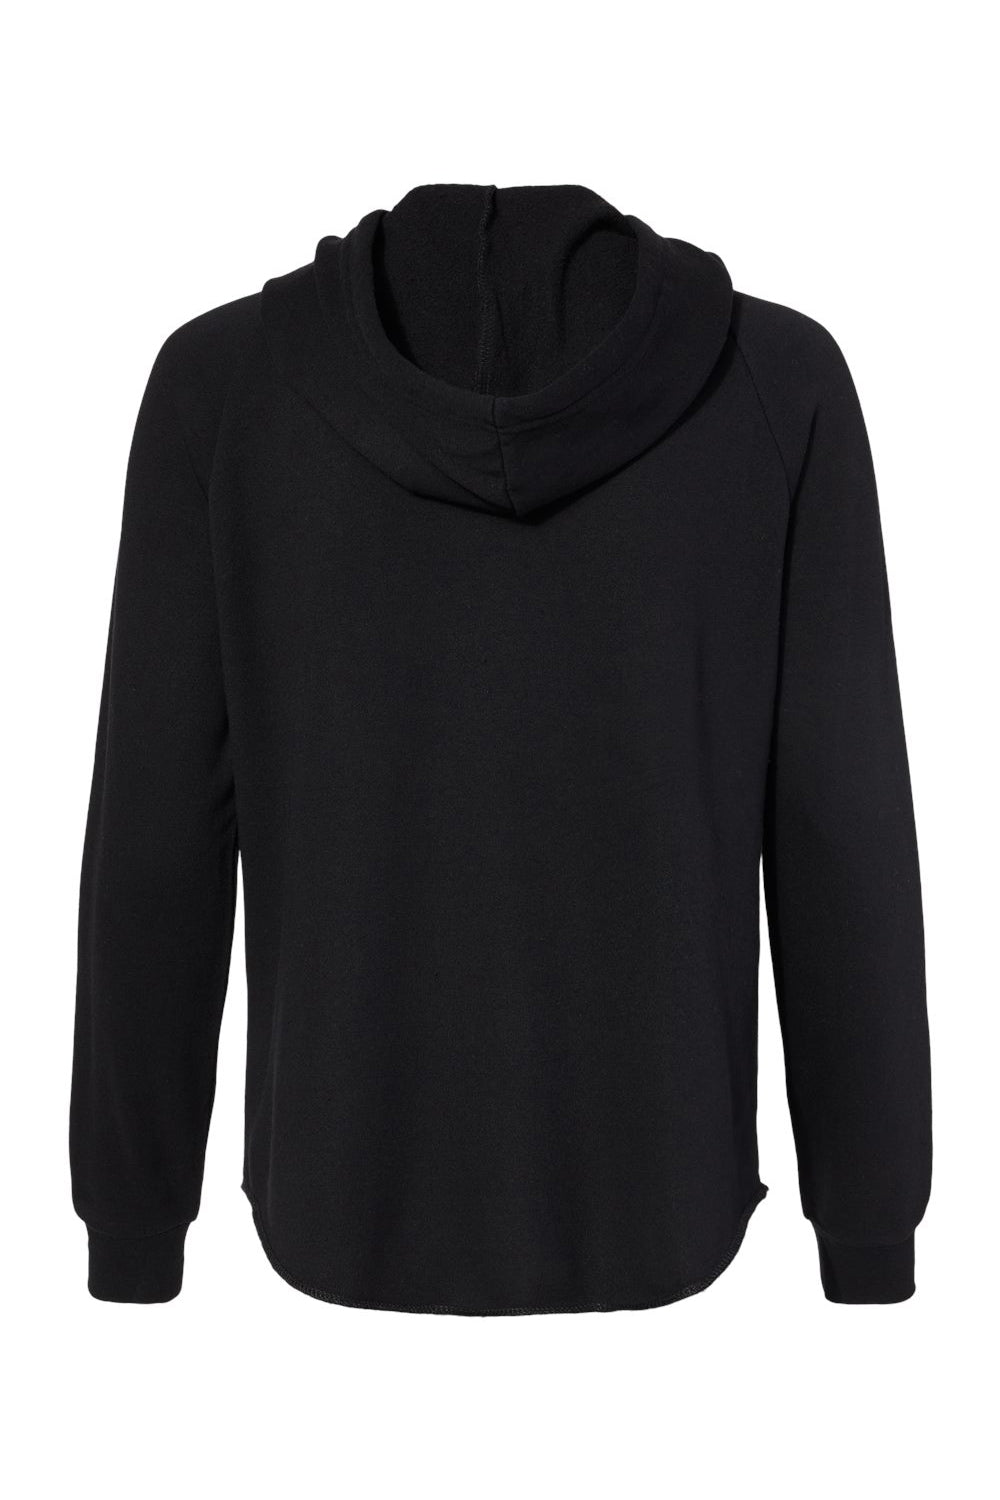 Independent Trading Co. PRM2500Z Womens California Wave Wash Full Zip Hooded Sweatshirt Hoodie Black Flat Back